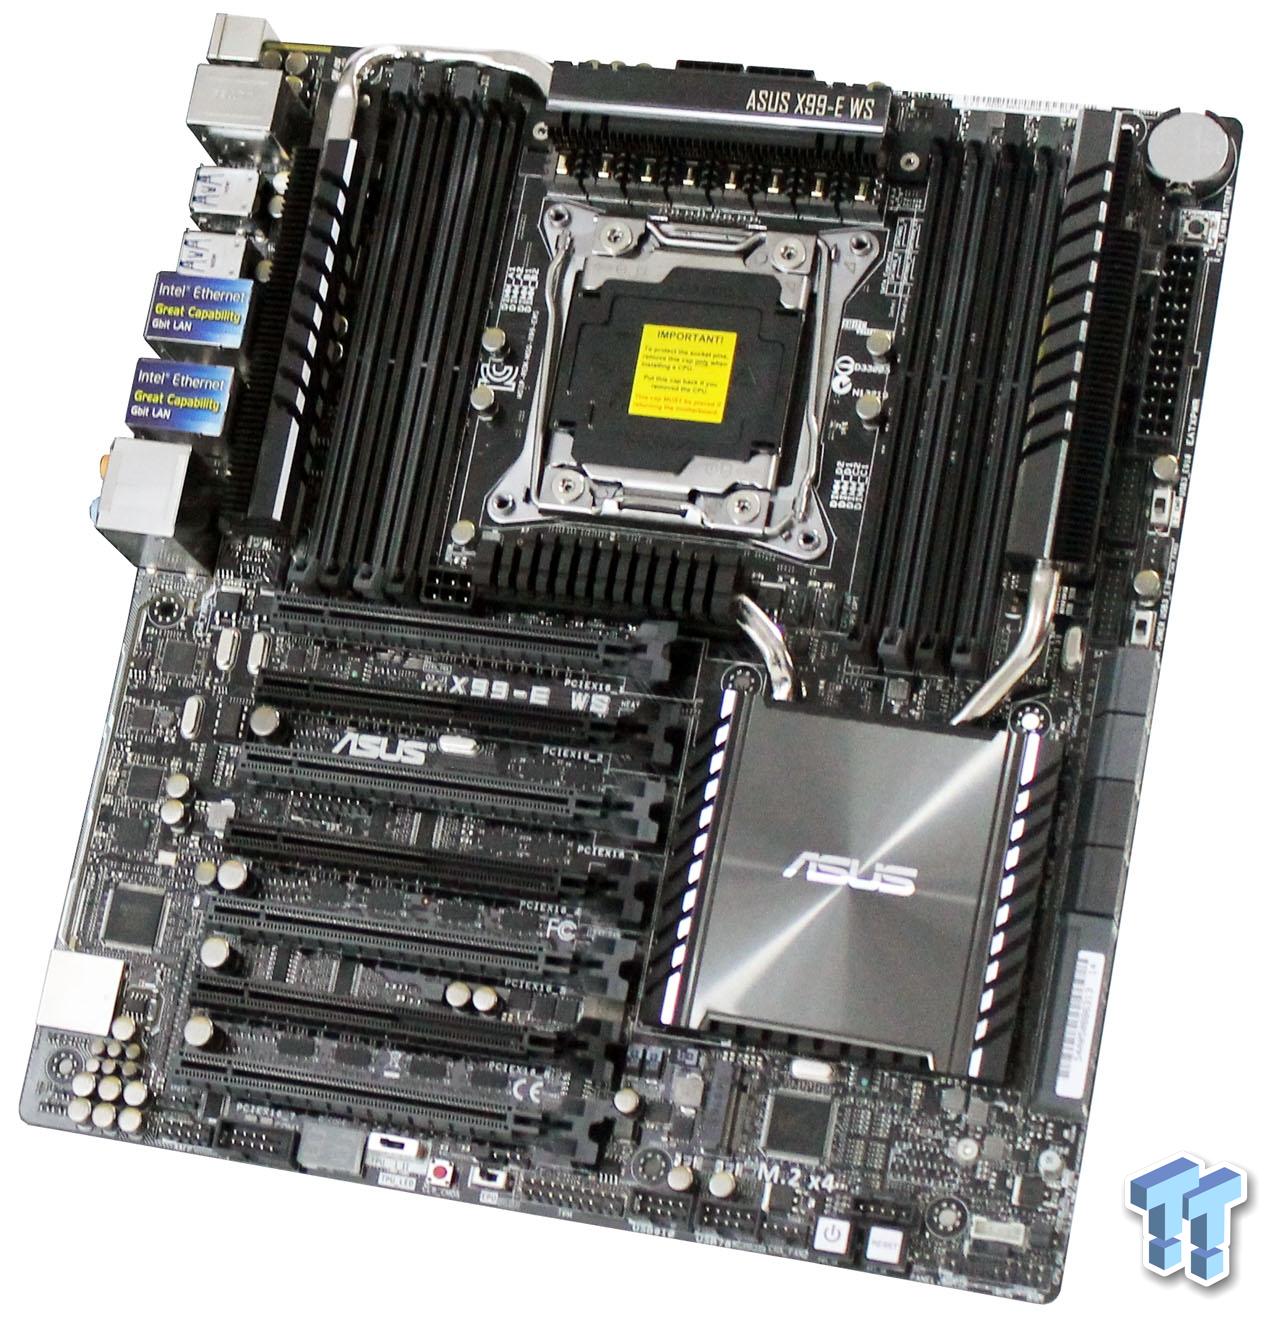 ASUS X99-E WS (Intel X99) Workstation Motherboard Review | TweakTown